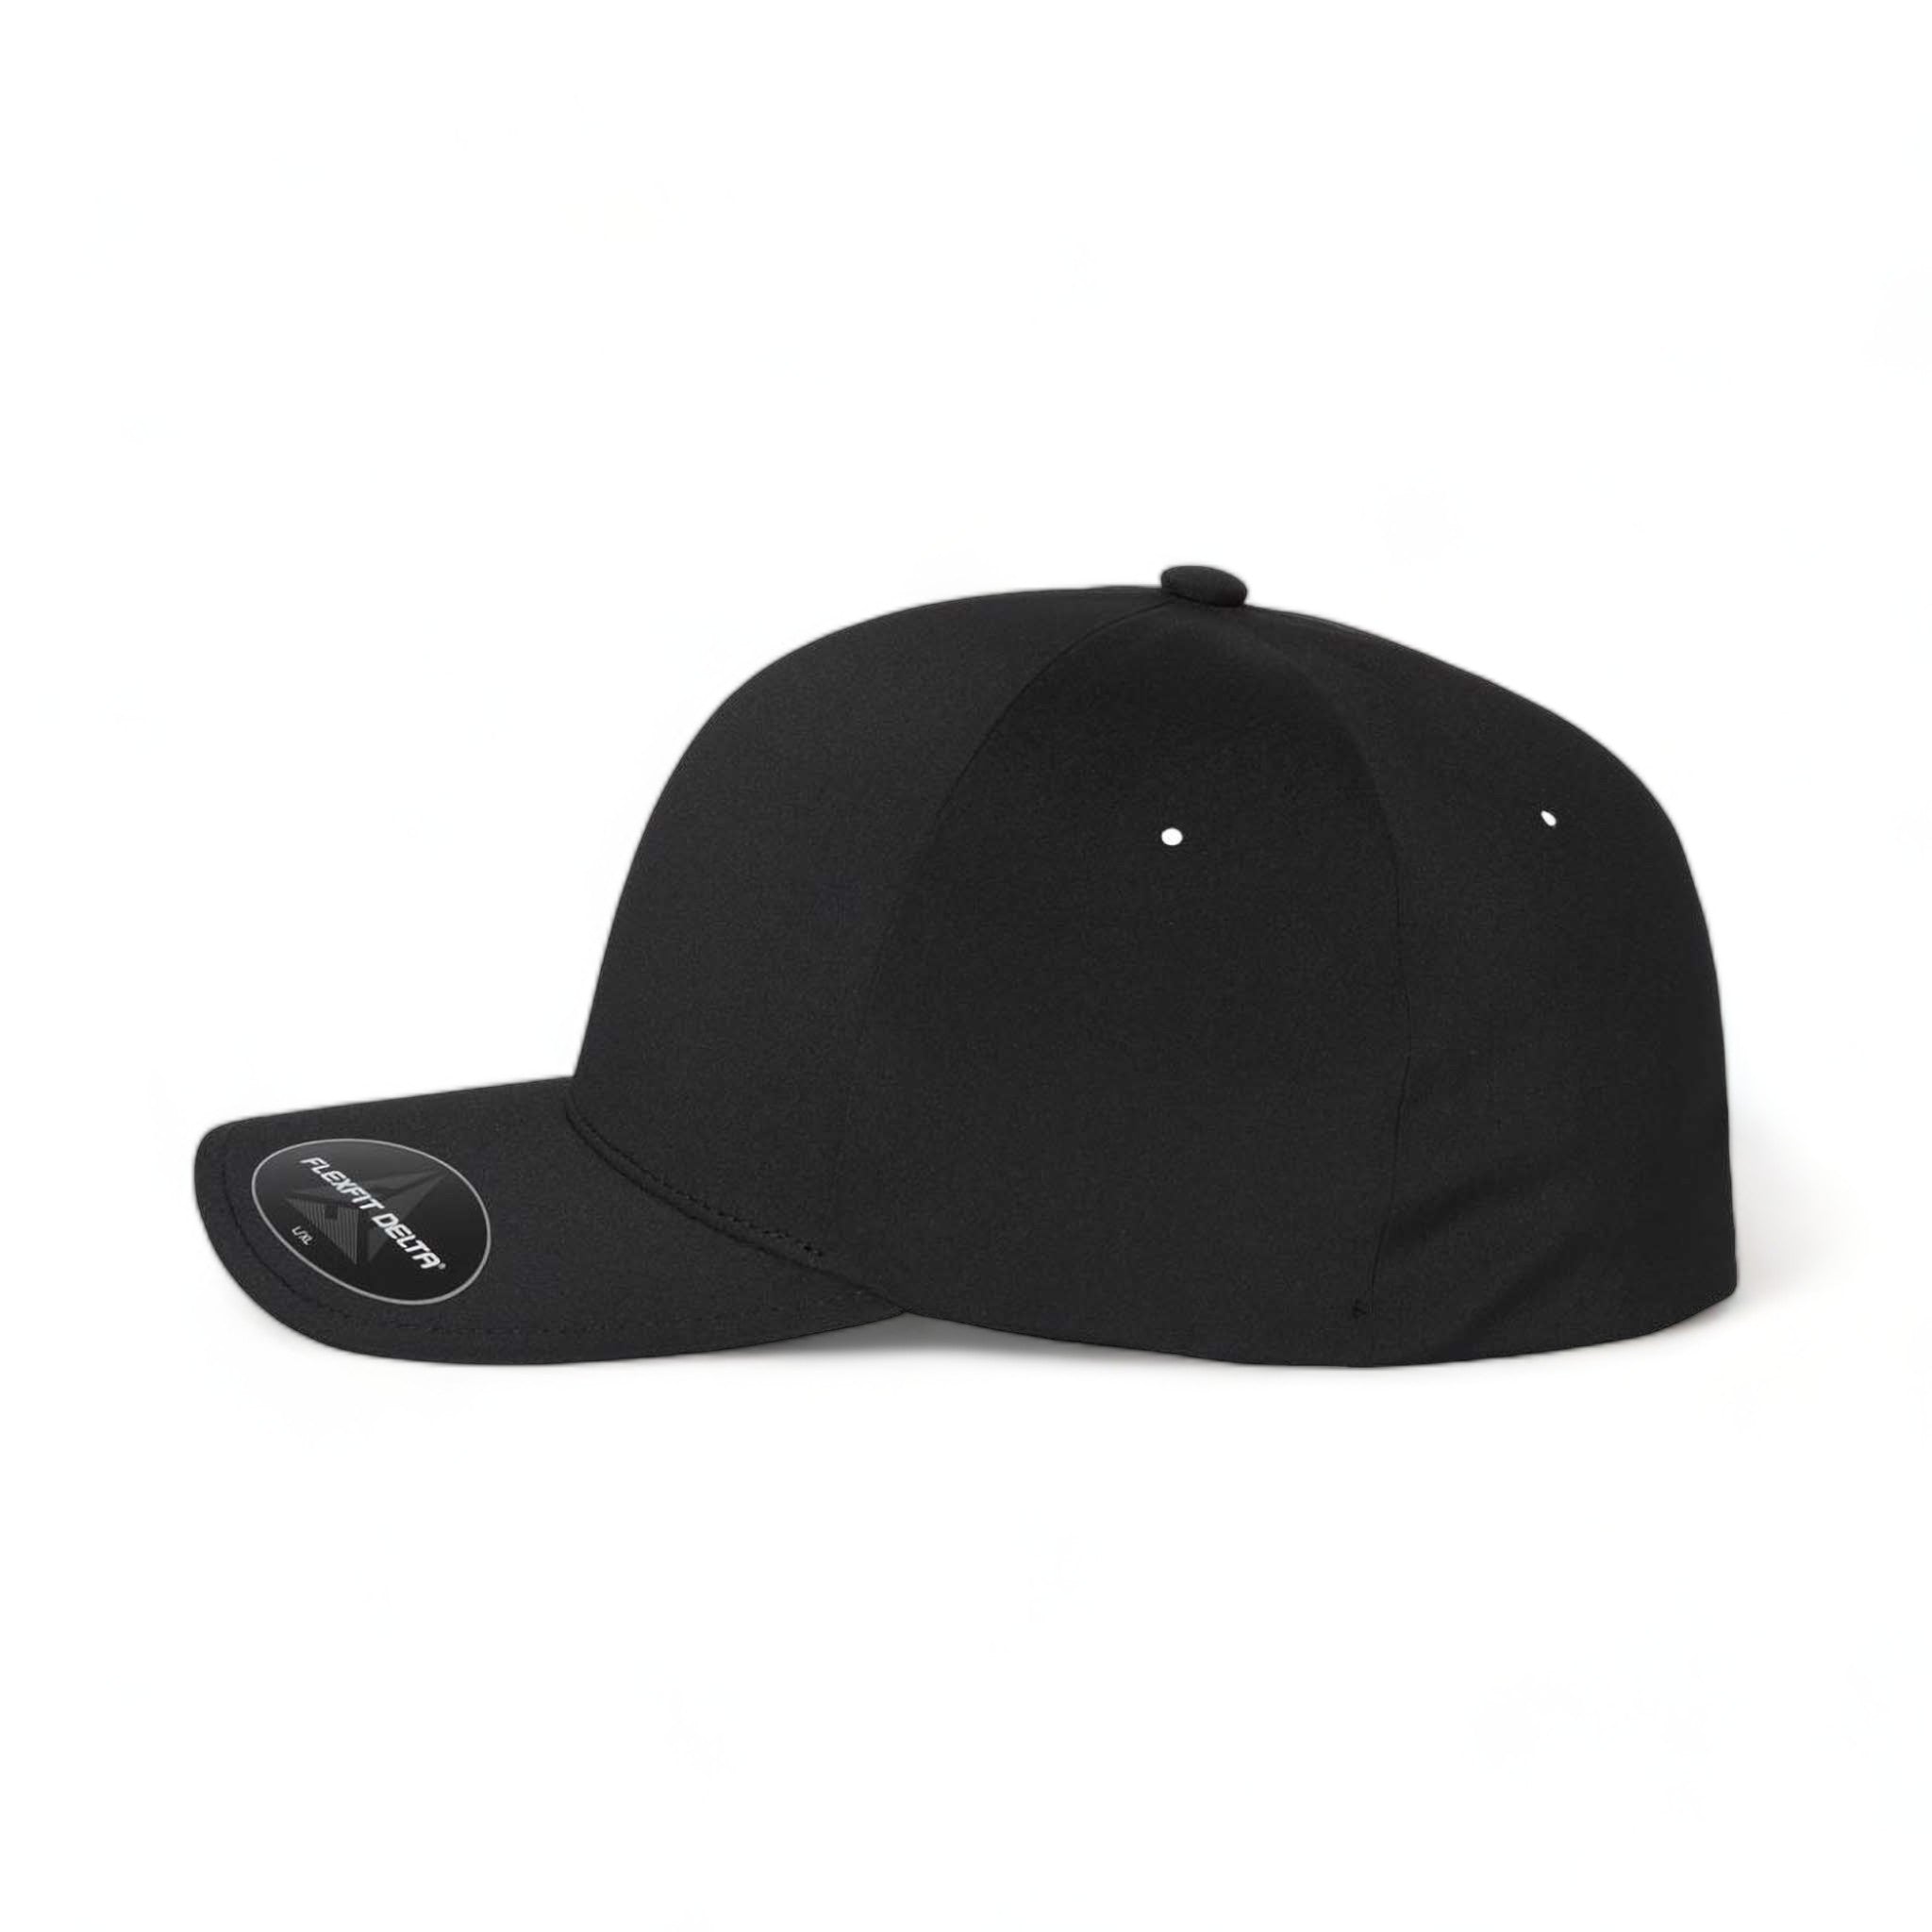 Side view of Flexfit 180 custom hat in black